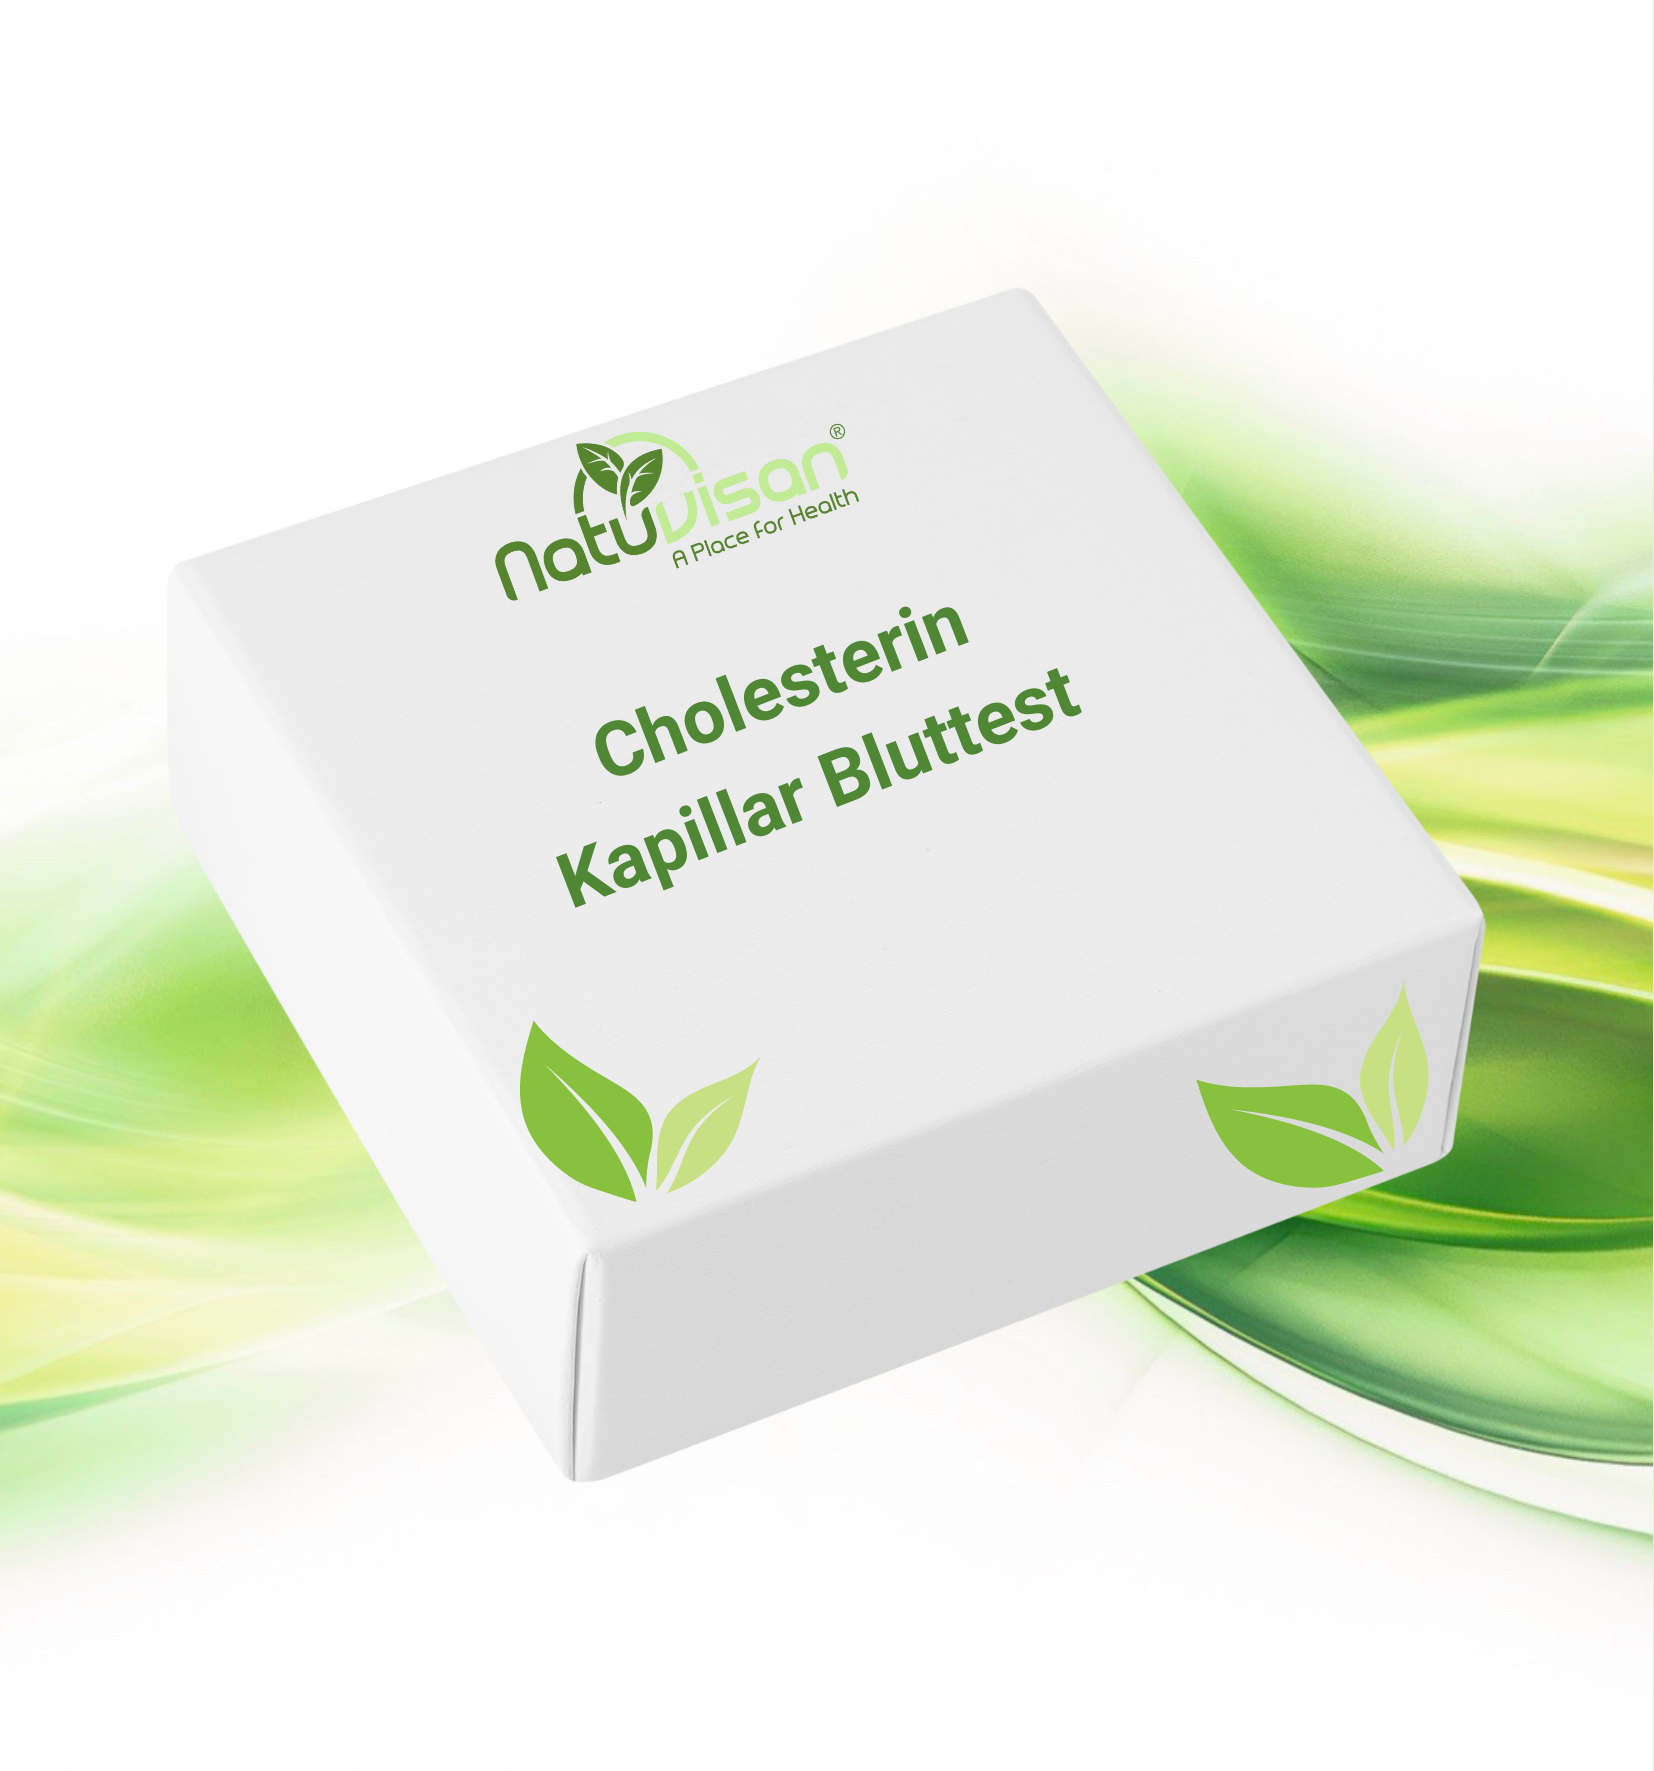 Cholesterin Kapillar Bluttest Blodspot - Testkit für zu Hause